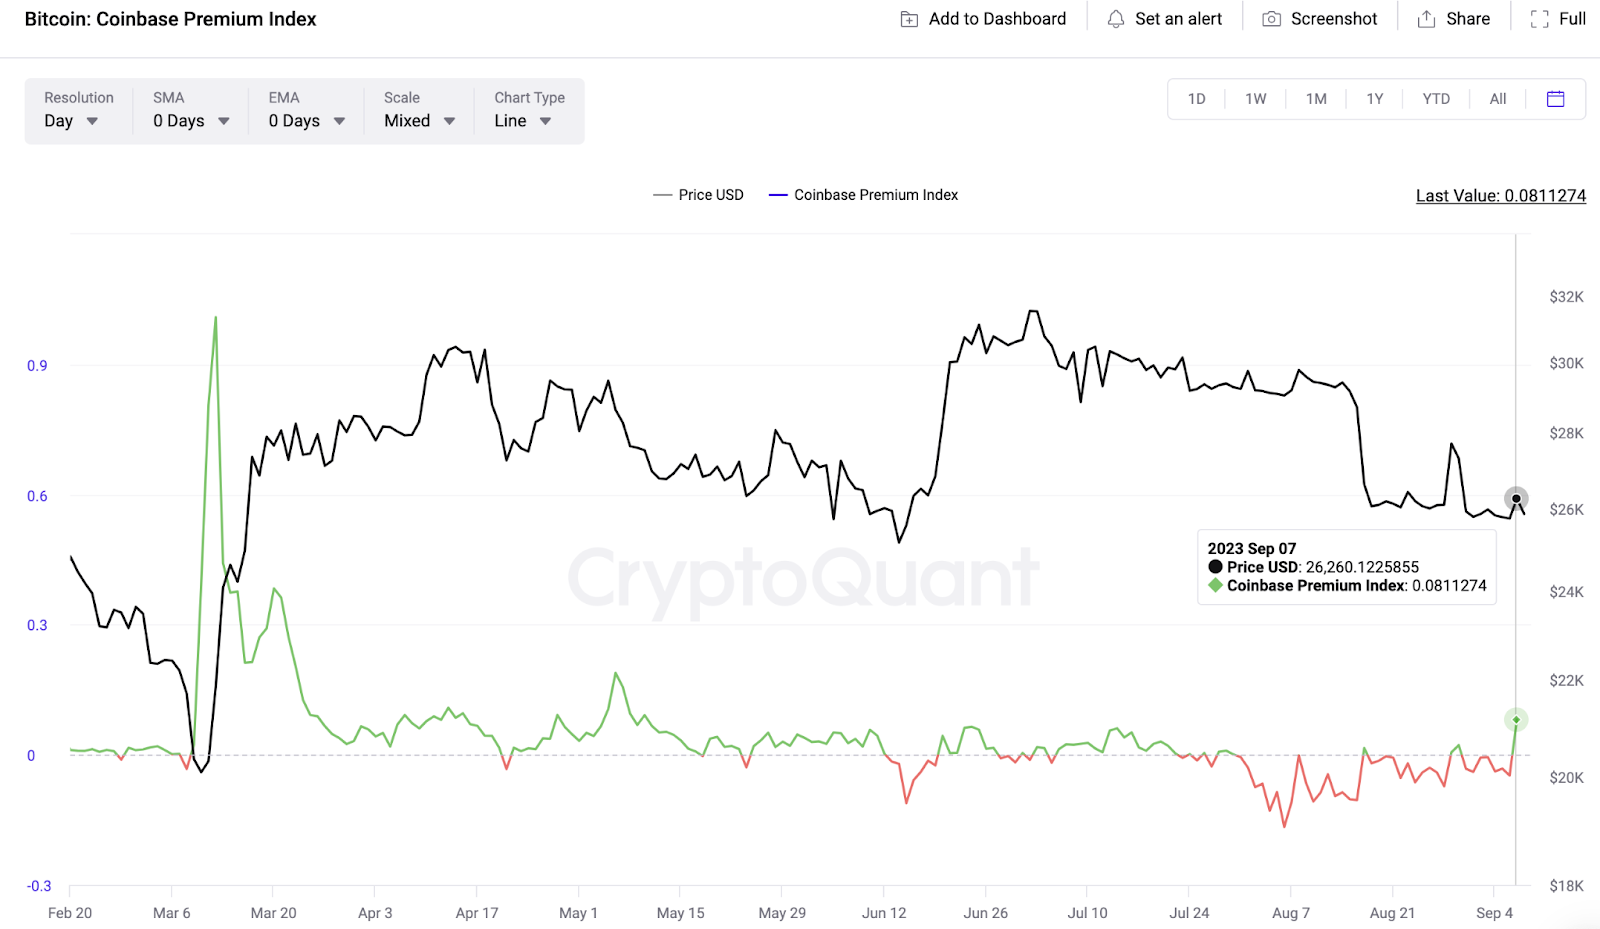 USA Whales Could Trigger Bitcoin (BTC) Price Rally | Coinbase Premium Index